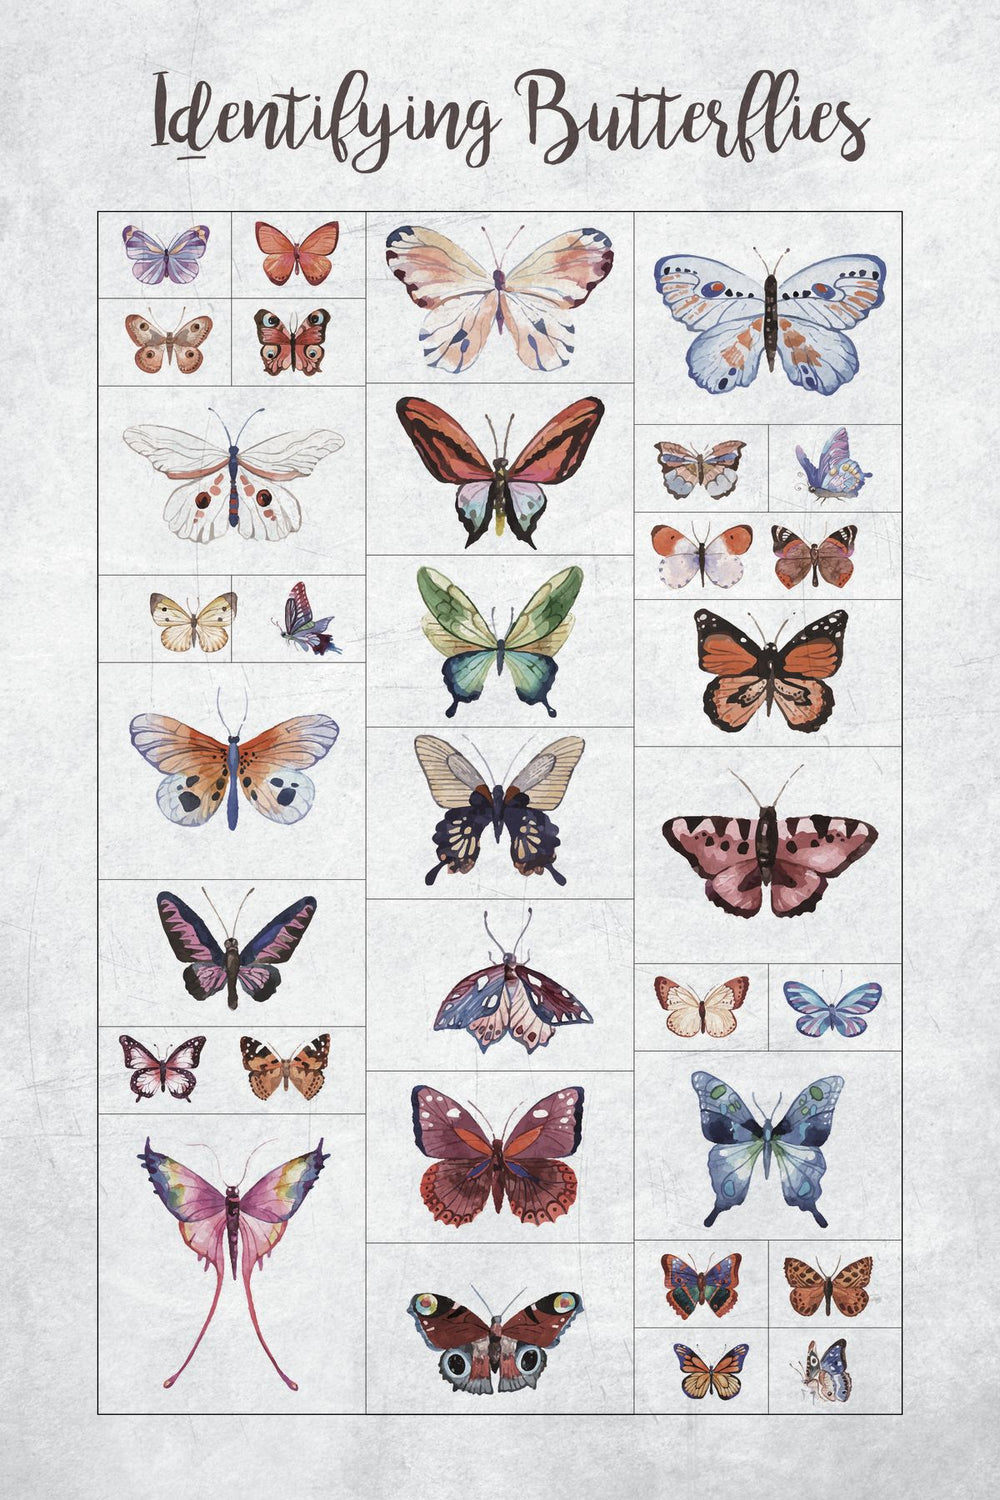 Identifying Butterflies Chart